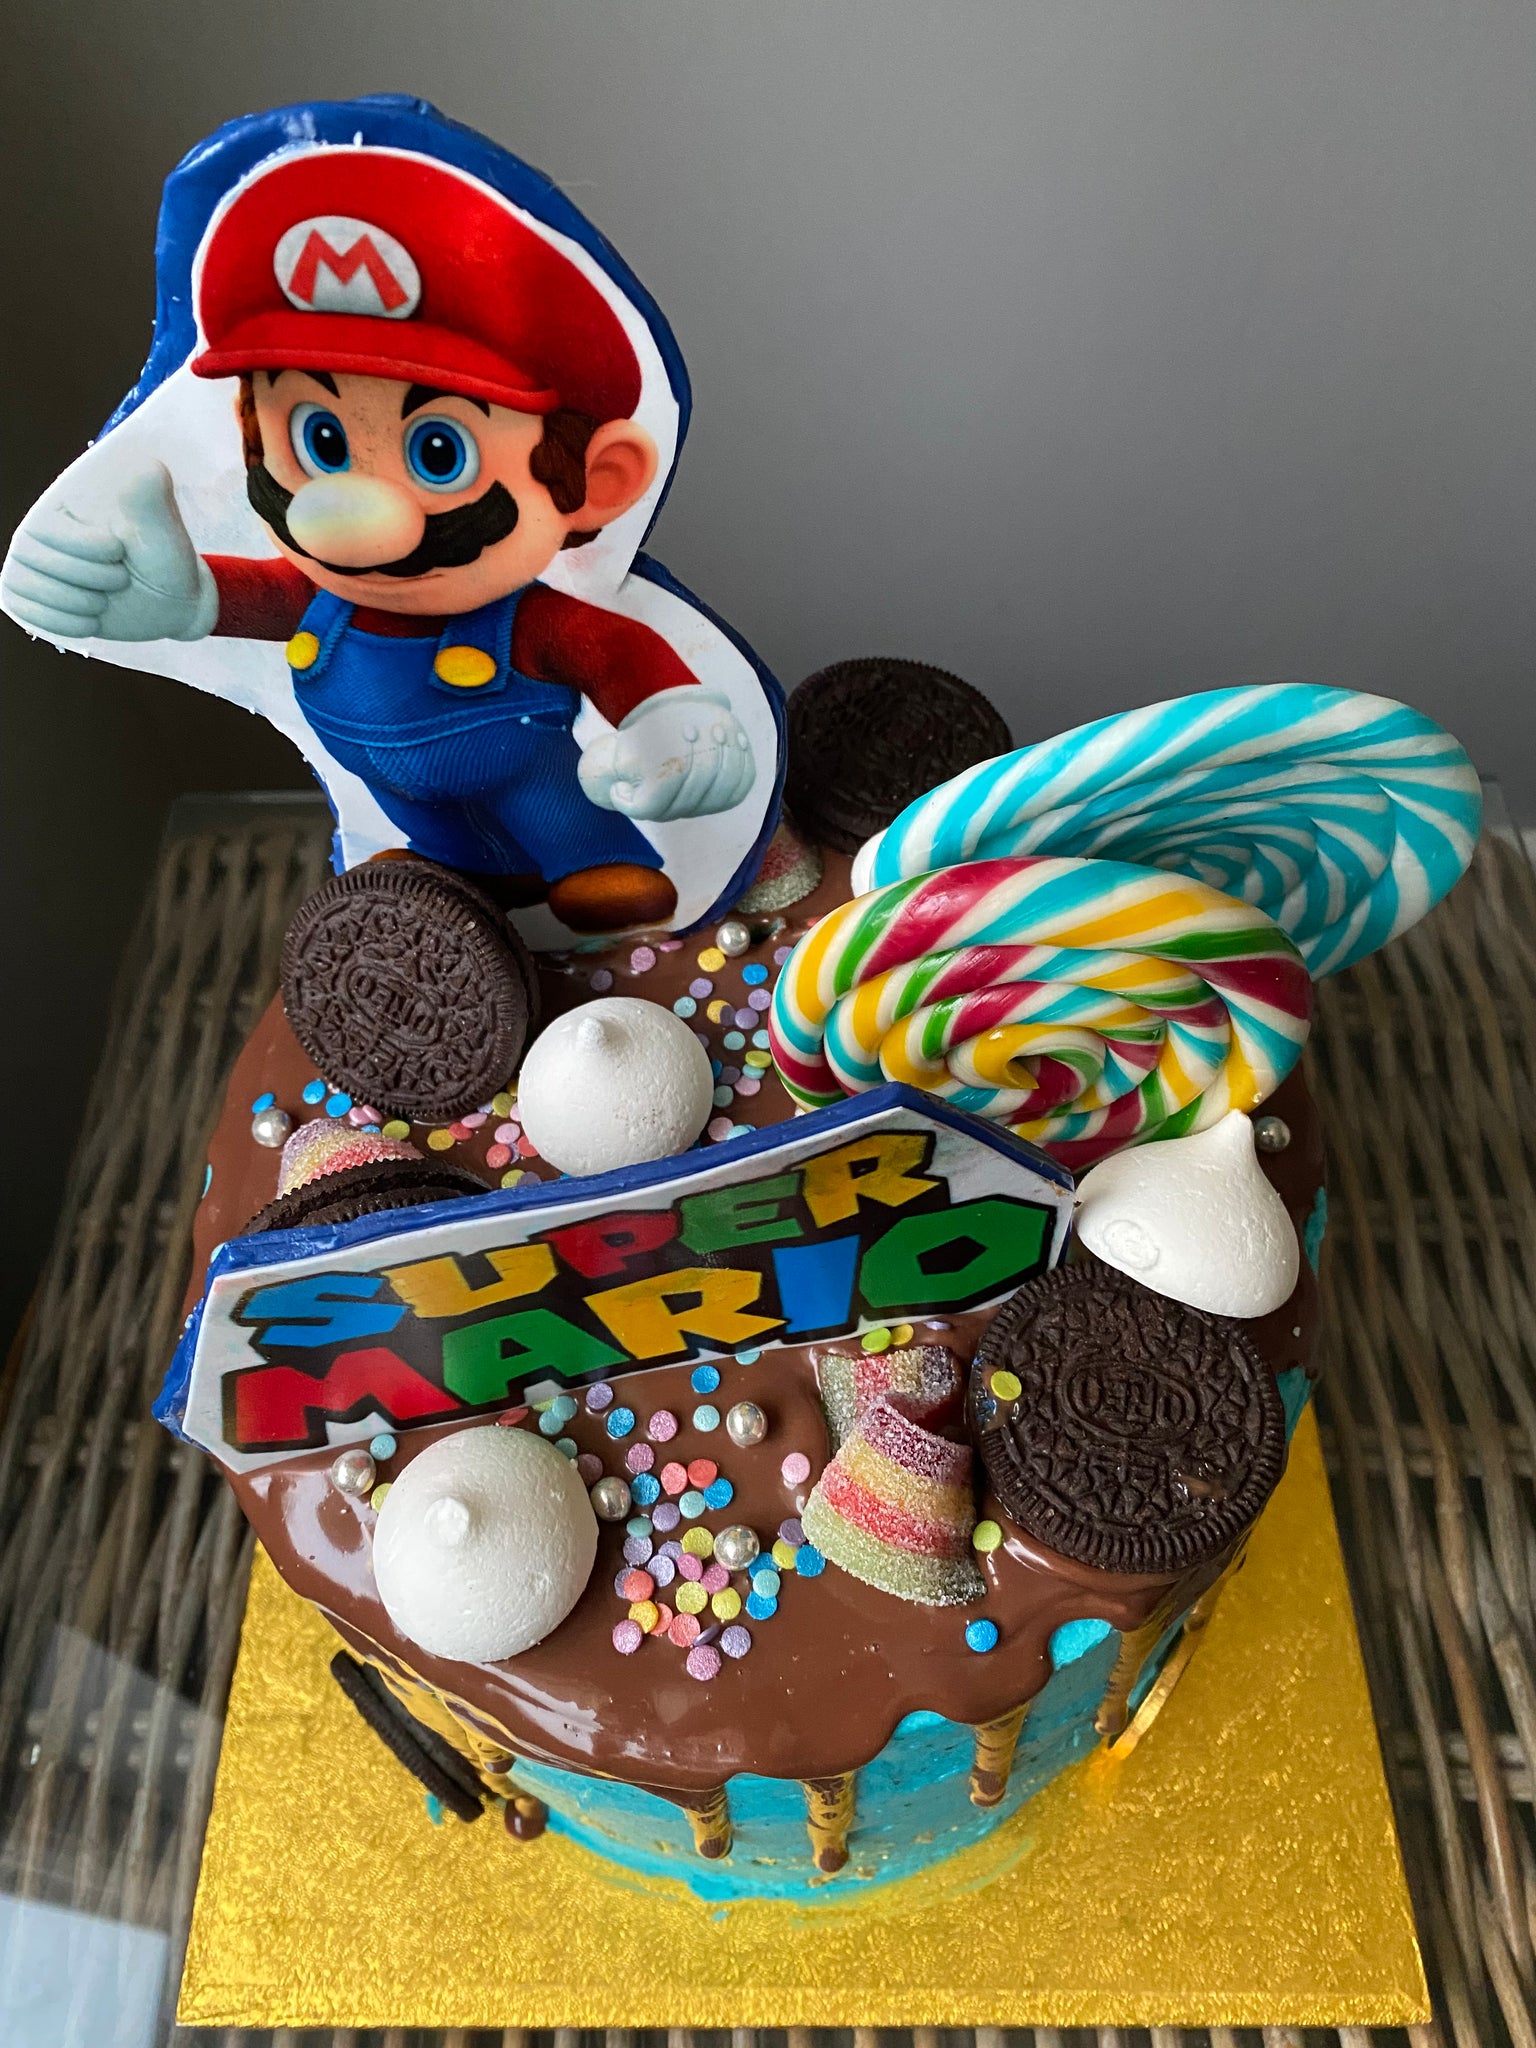 Super Mario Character cake